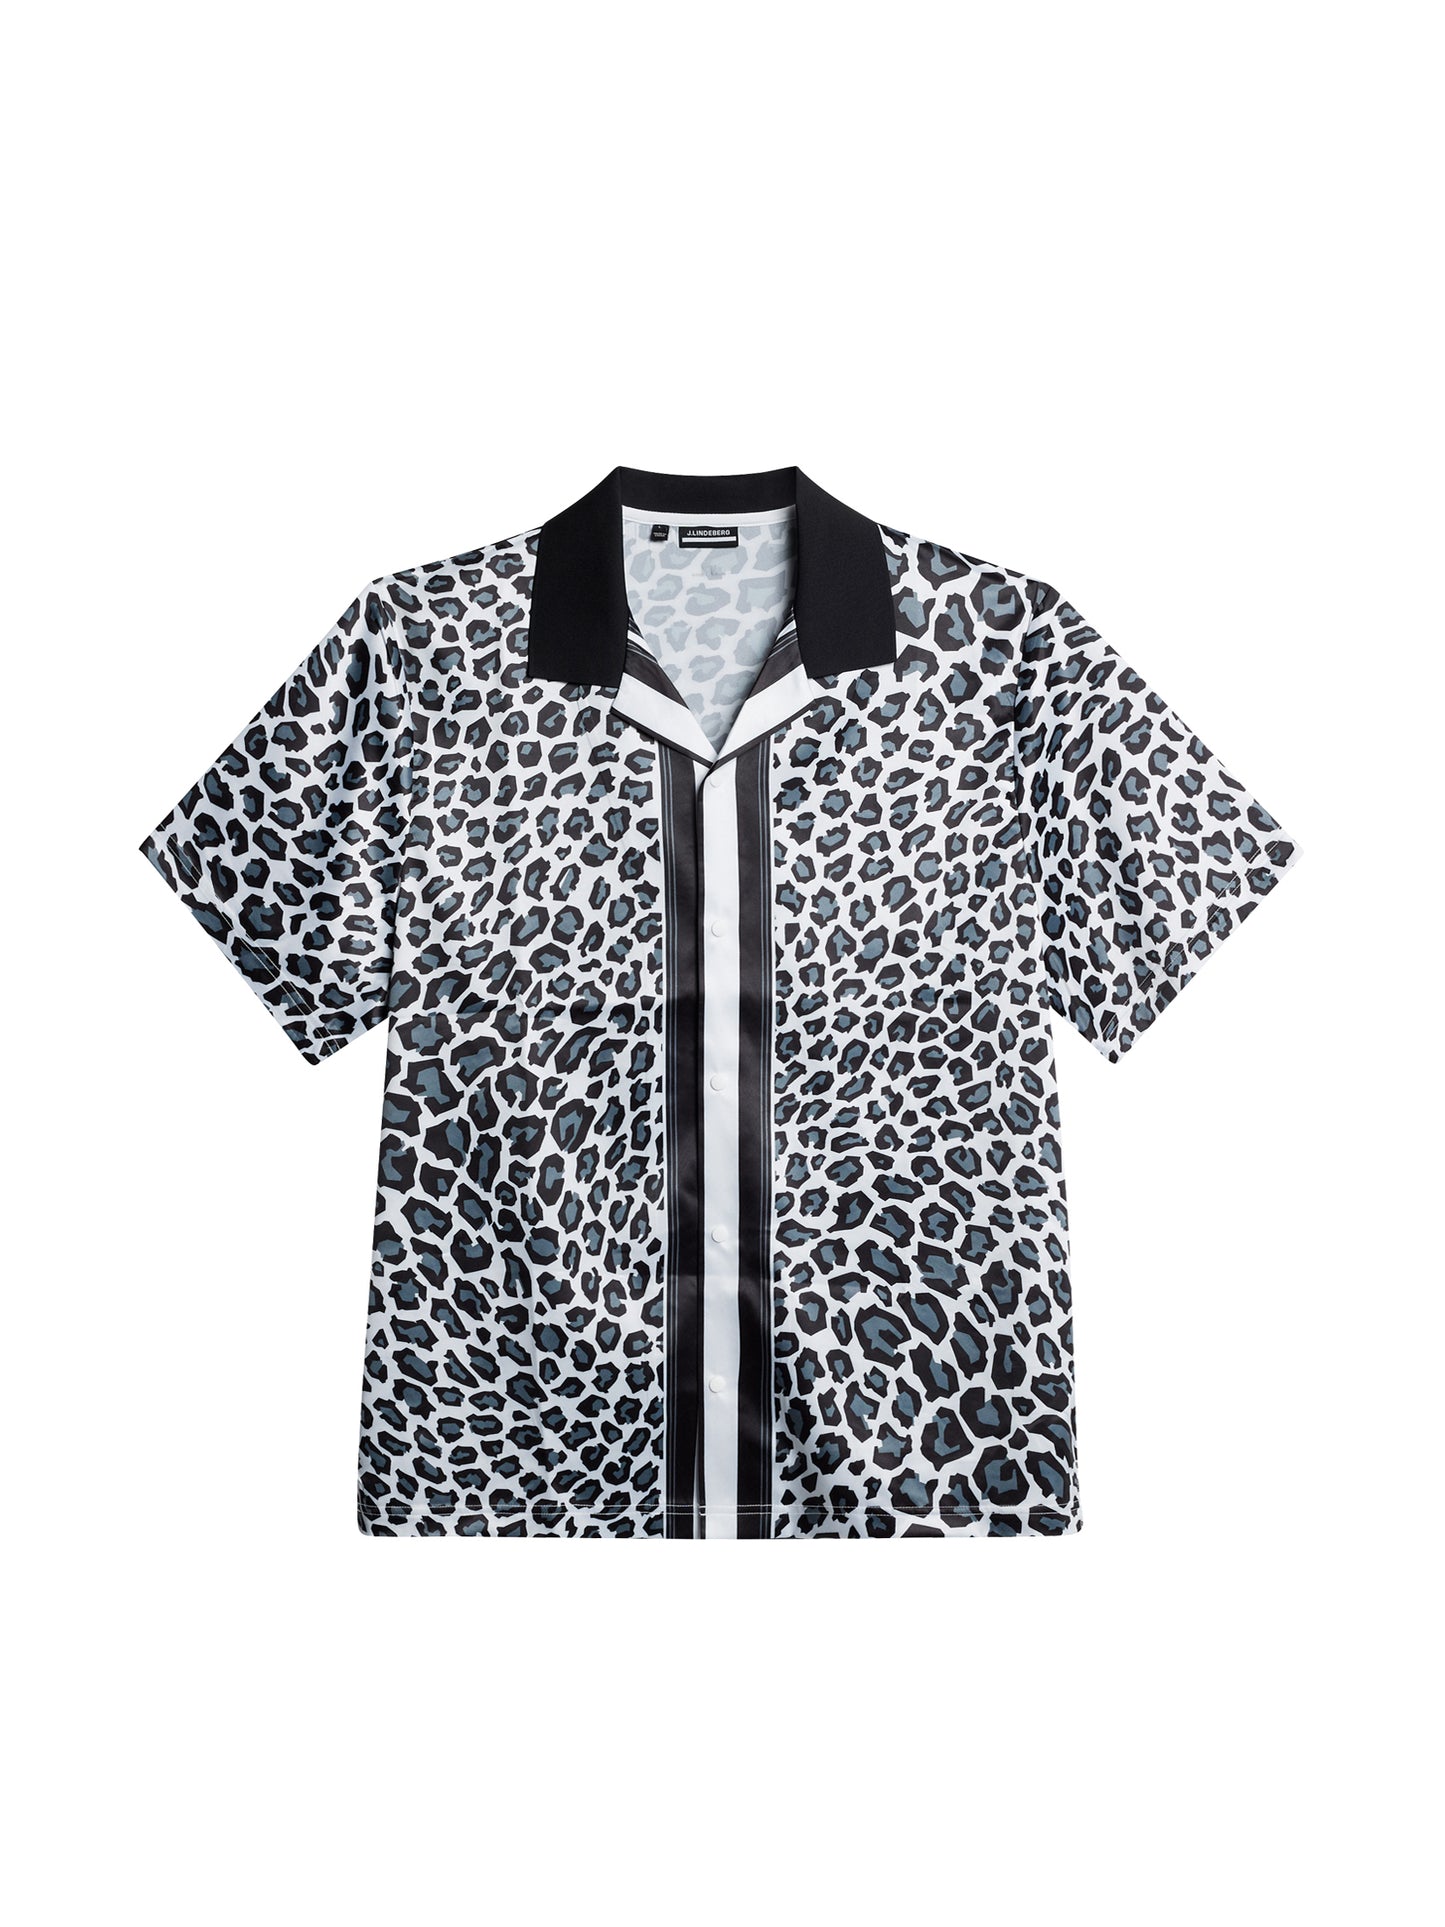 Roscoe Print Shirt / BW Leopard